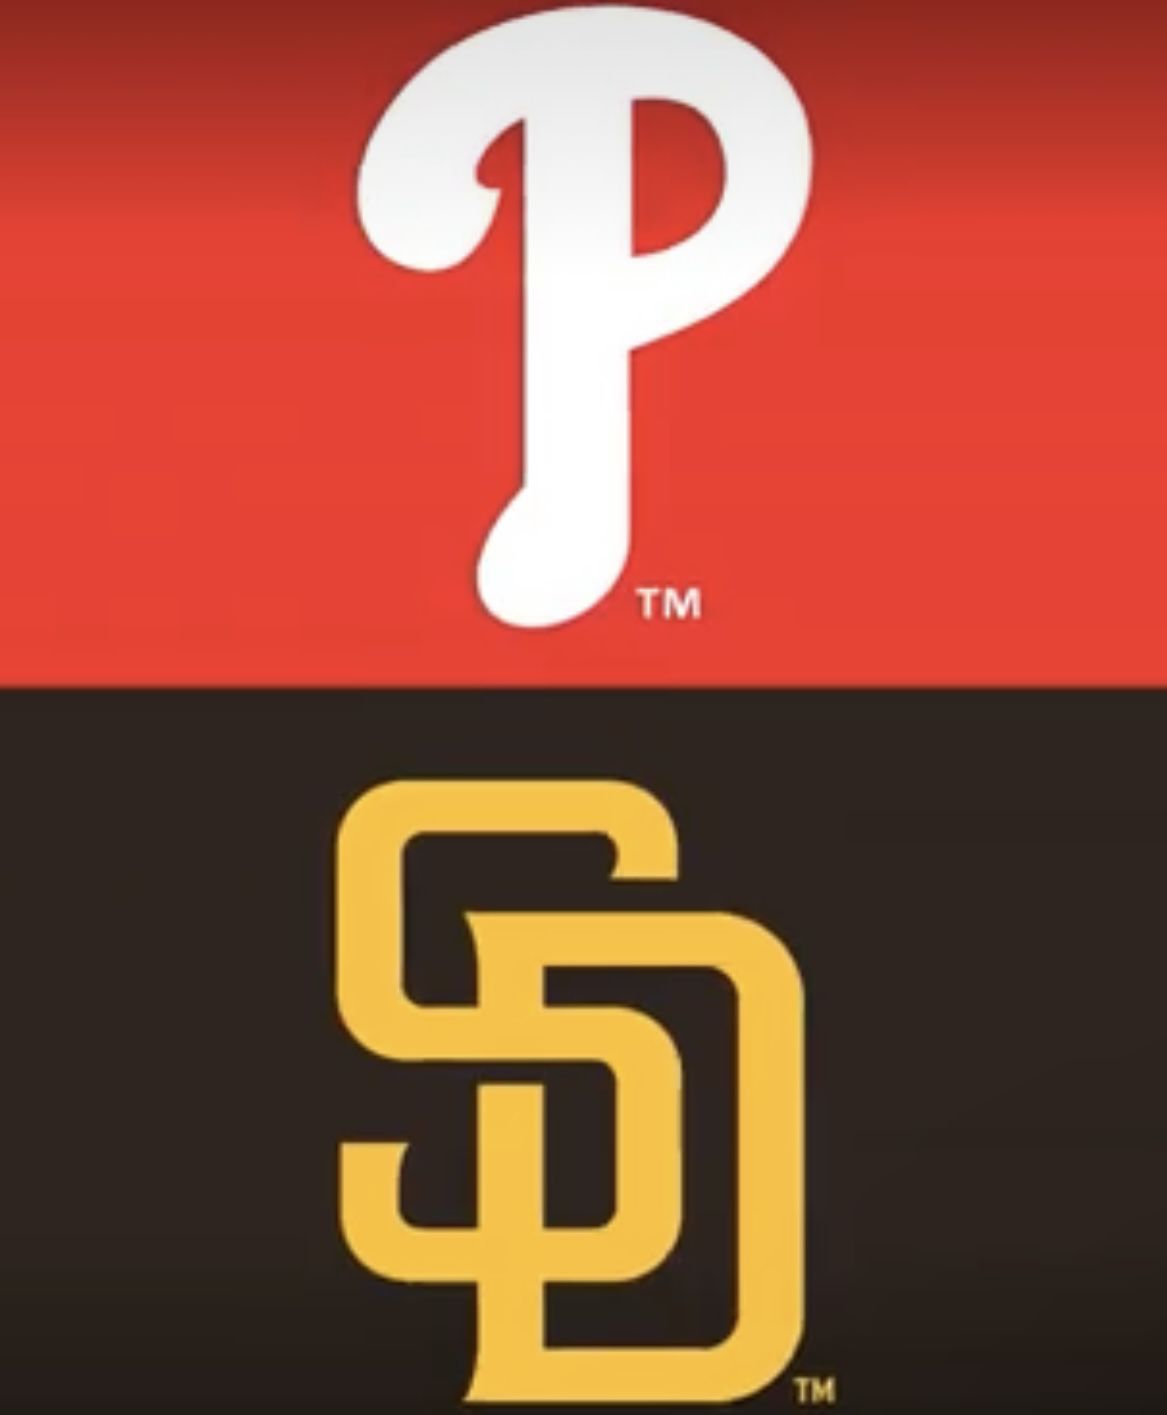 Phillies vs Padres